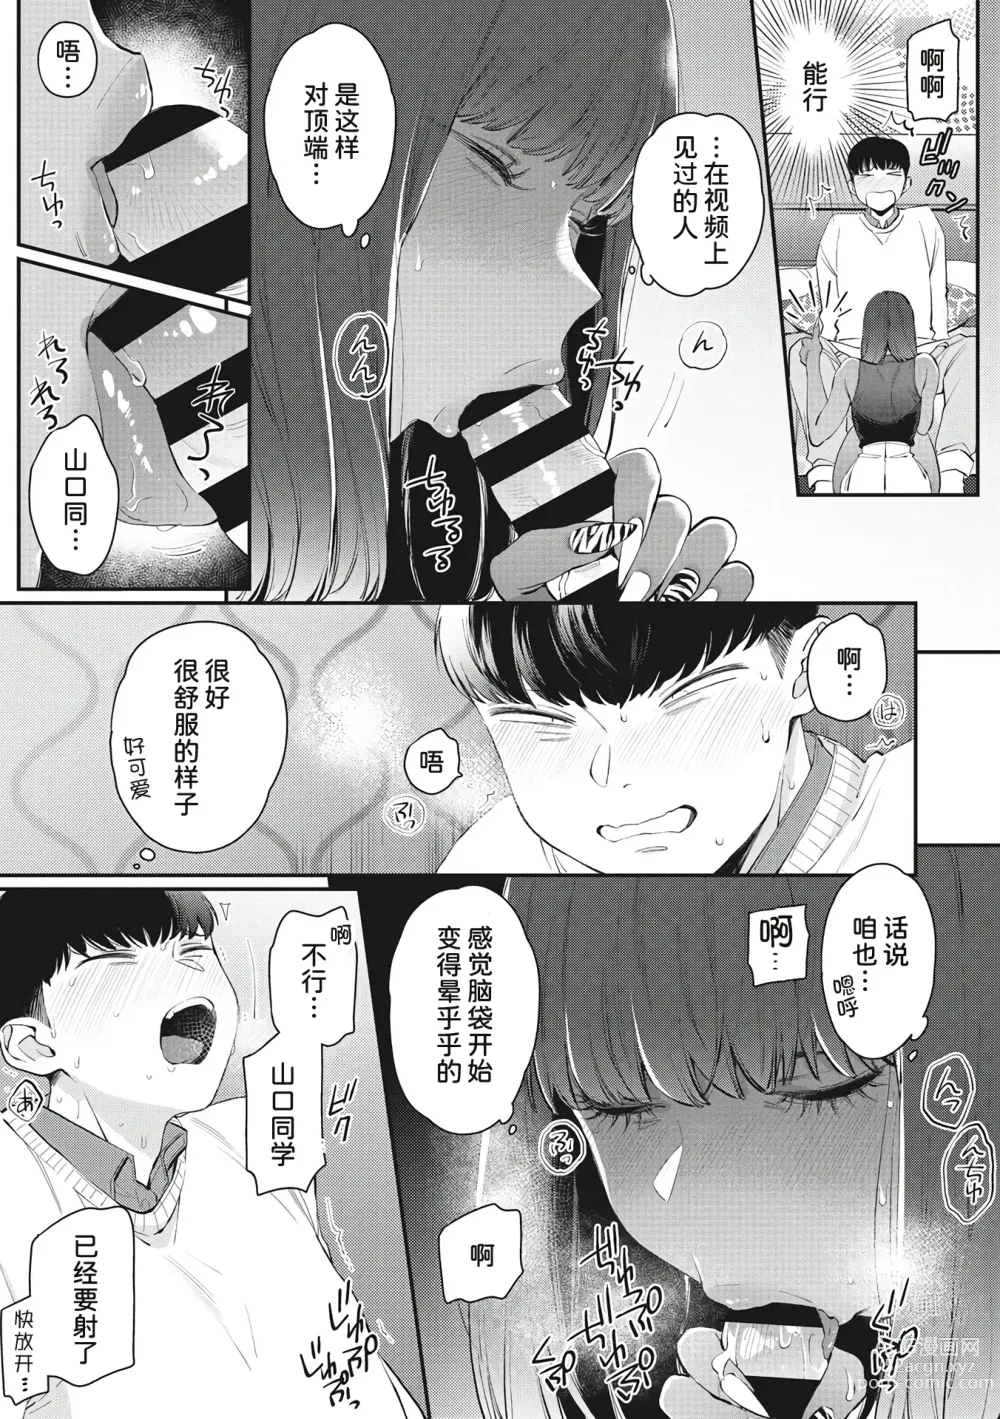 Page 5 of manga 辣妹的可爱的死要面子